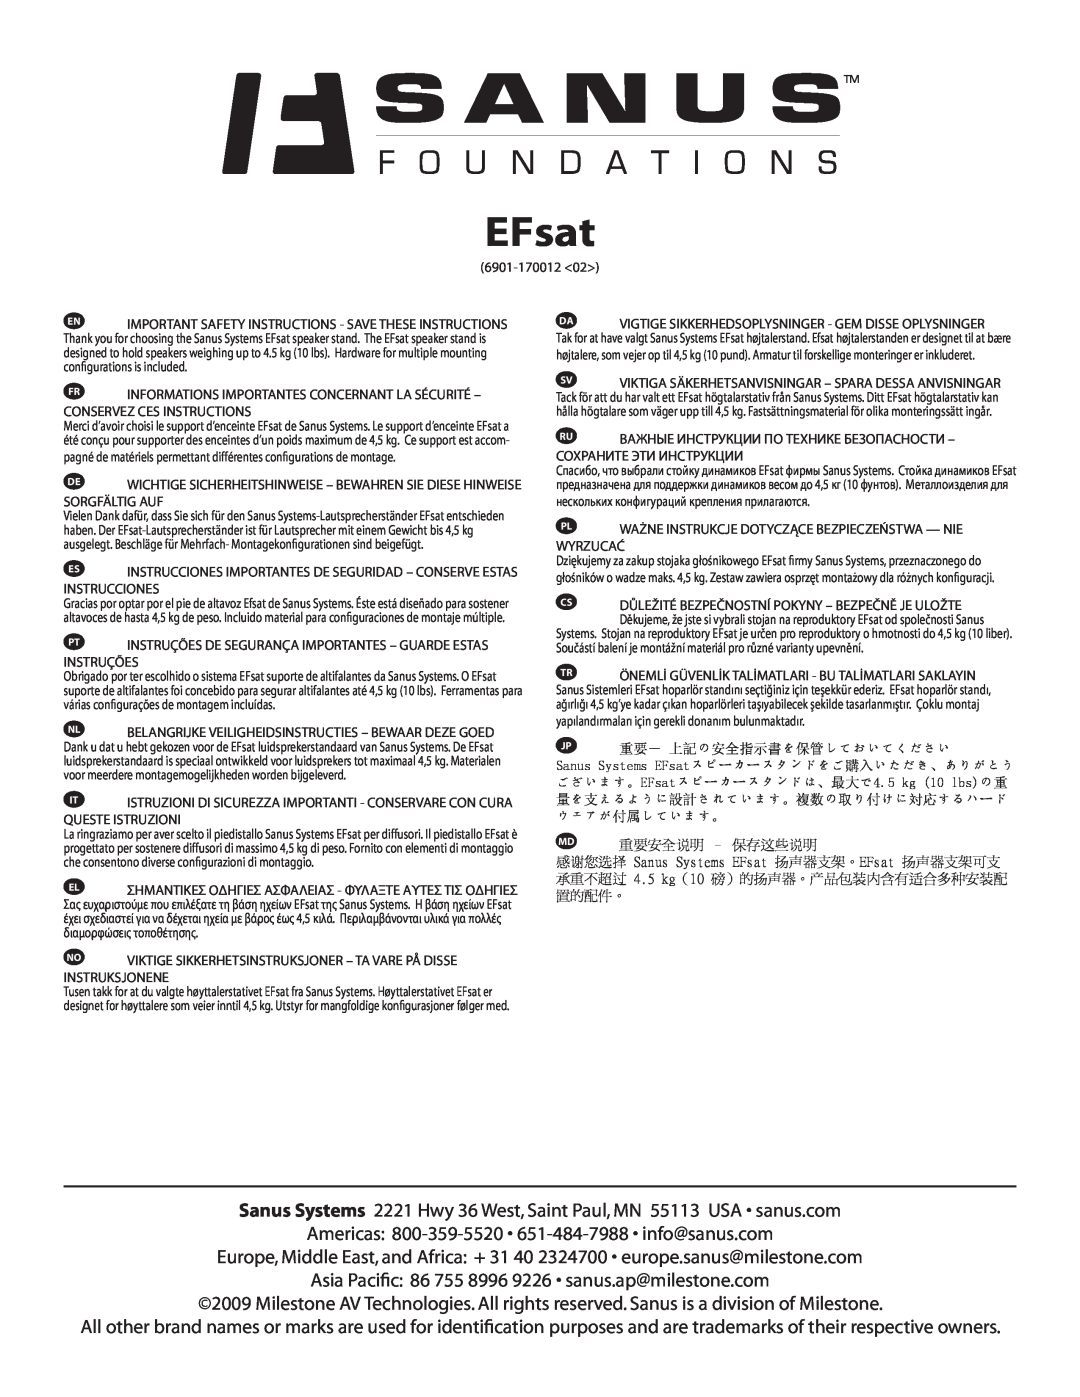 Sanus Systems EFSat important safety instructions EFsat, 重要－ 上記の安全指示書を保管しておいてください 